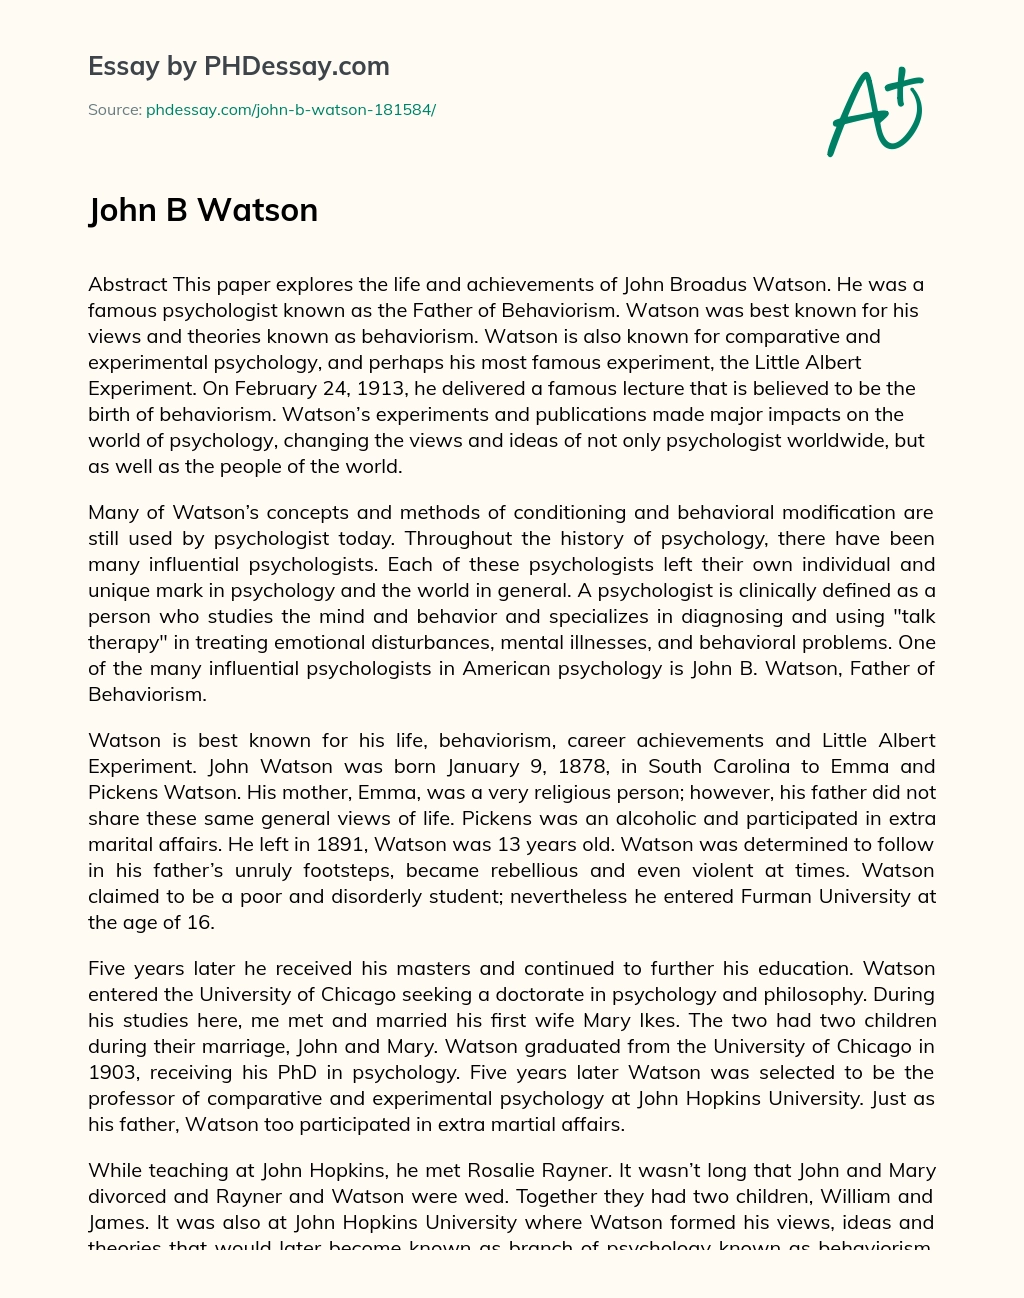 John B Watson essay